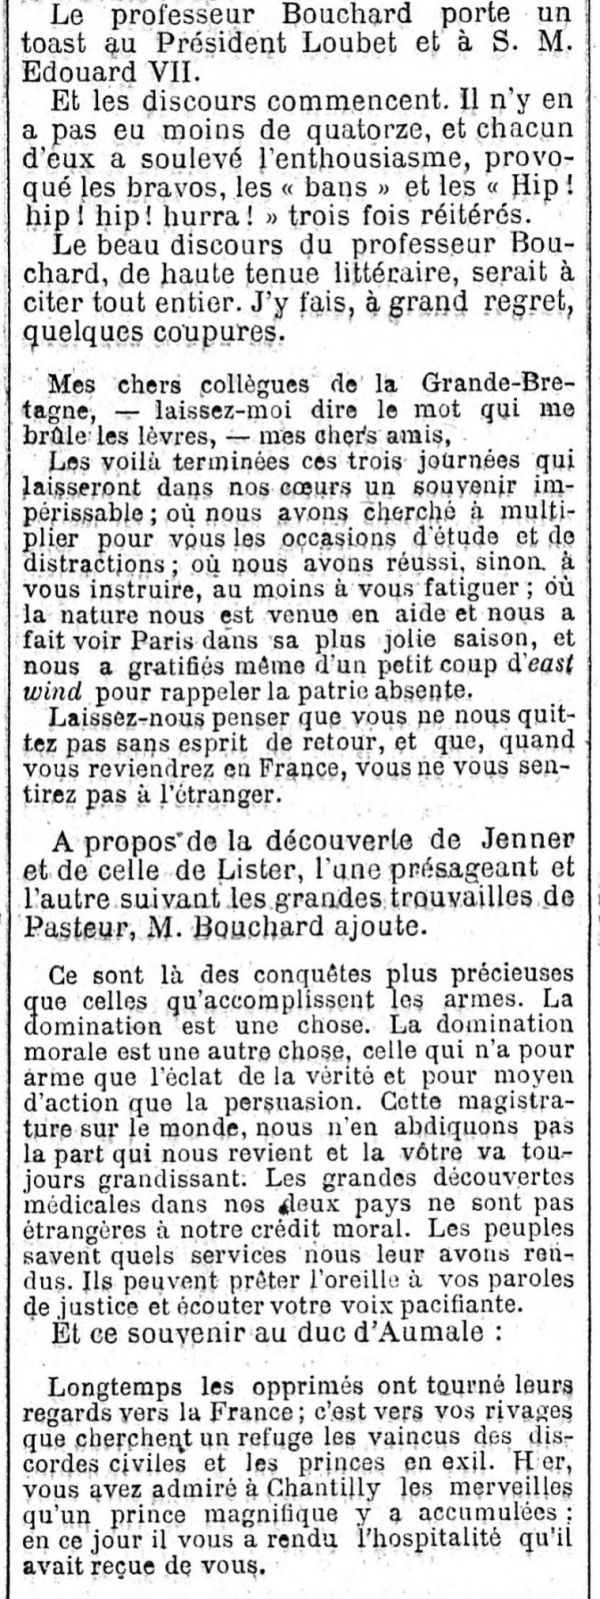 Le Figaro 14-05-1905 Source Gallica.bnf.fr